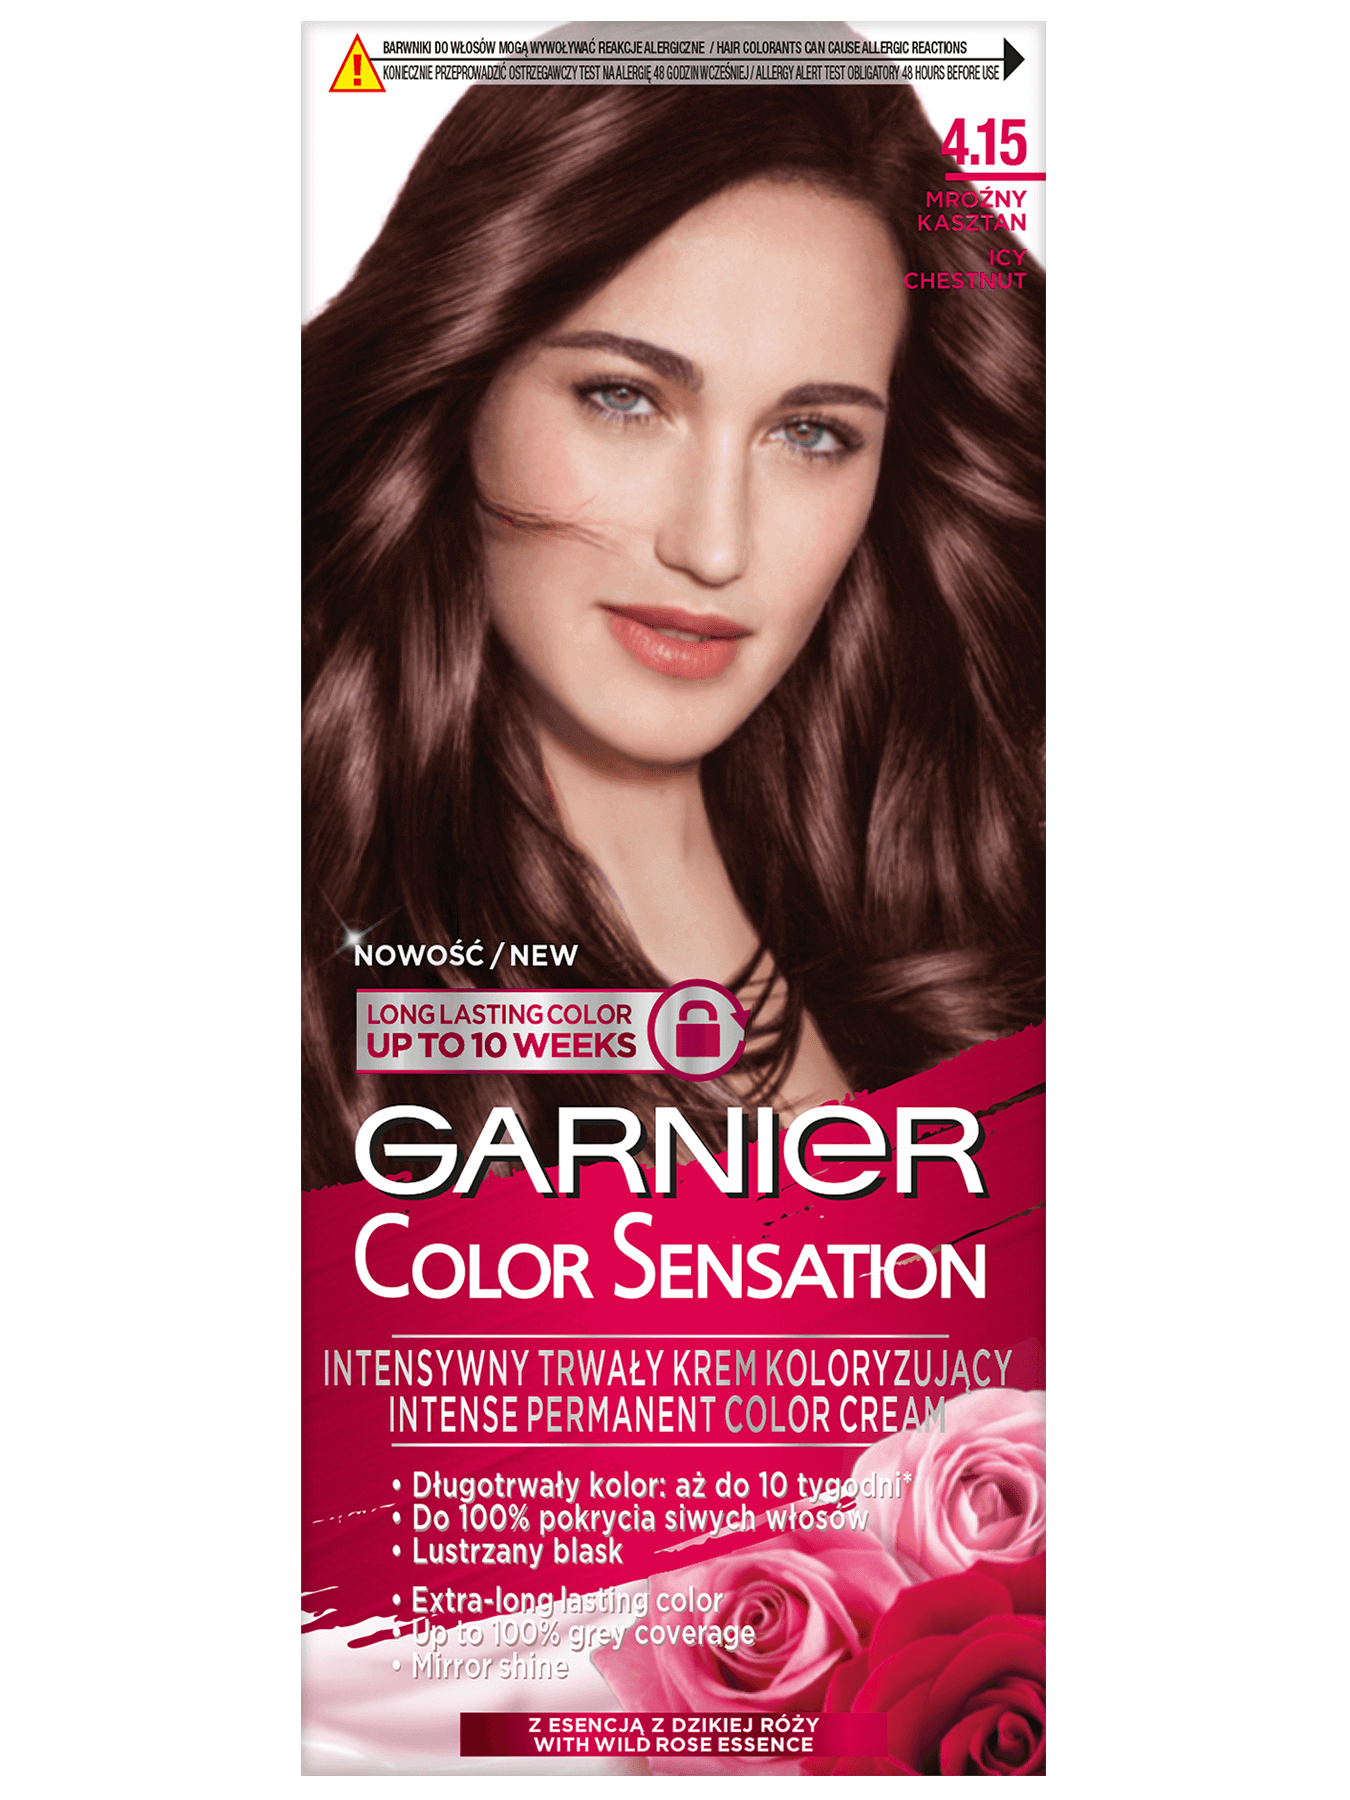 garnier color sensation 4 1 5 mrozny kasztan 1350x1800